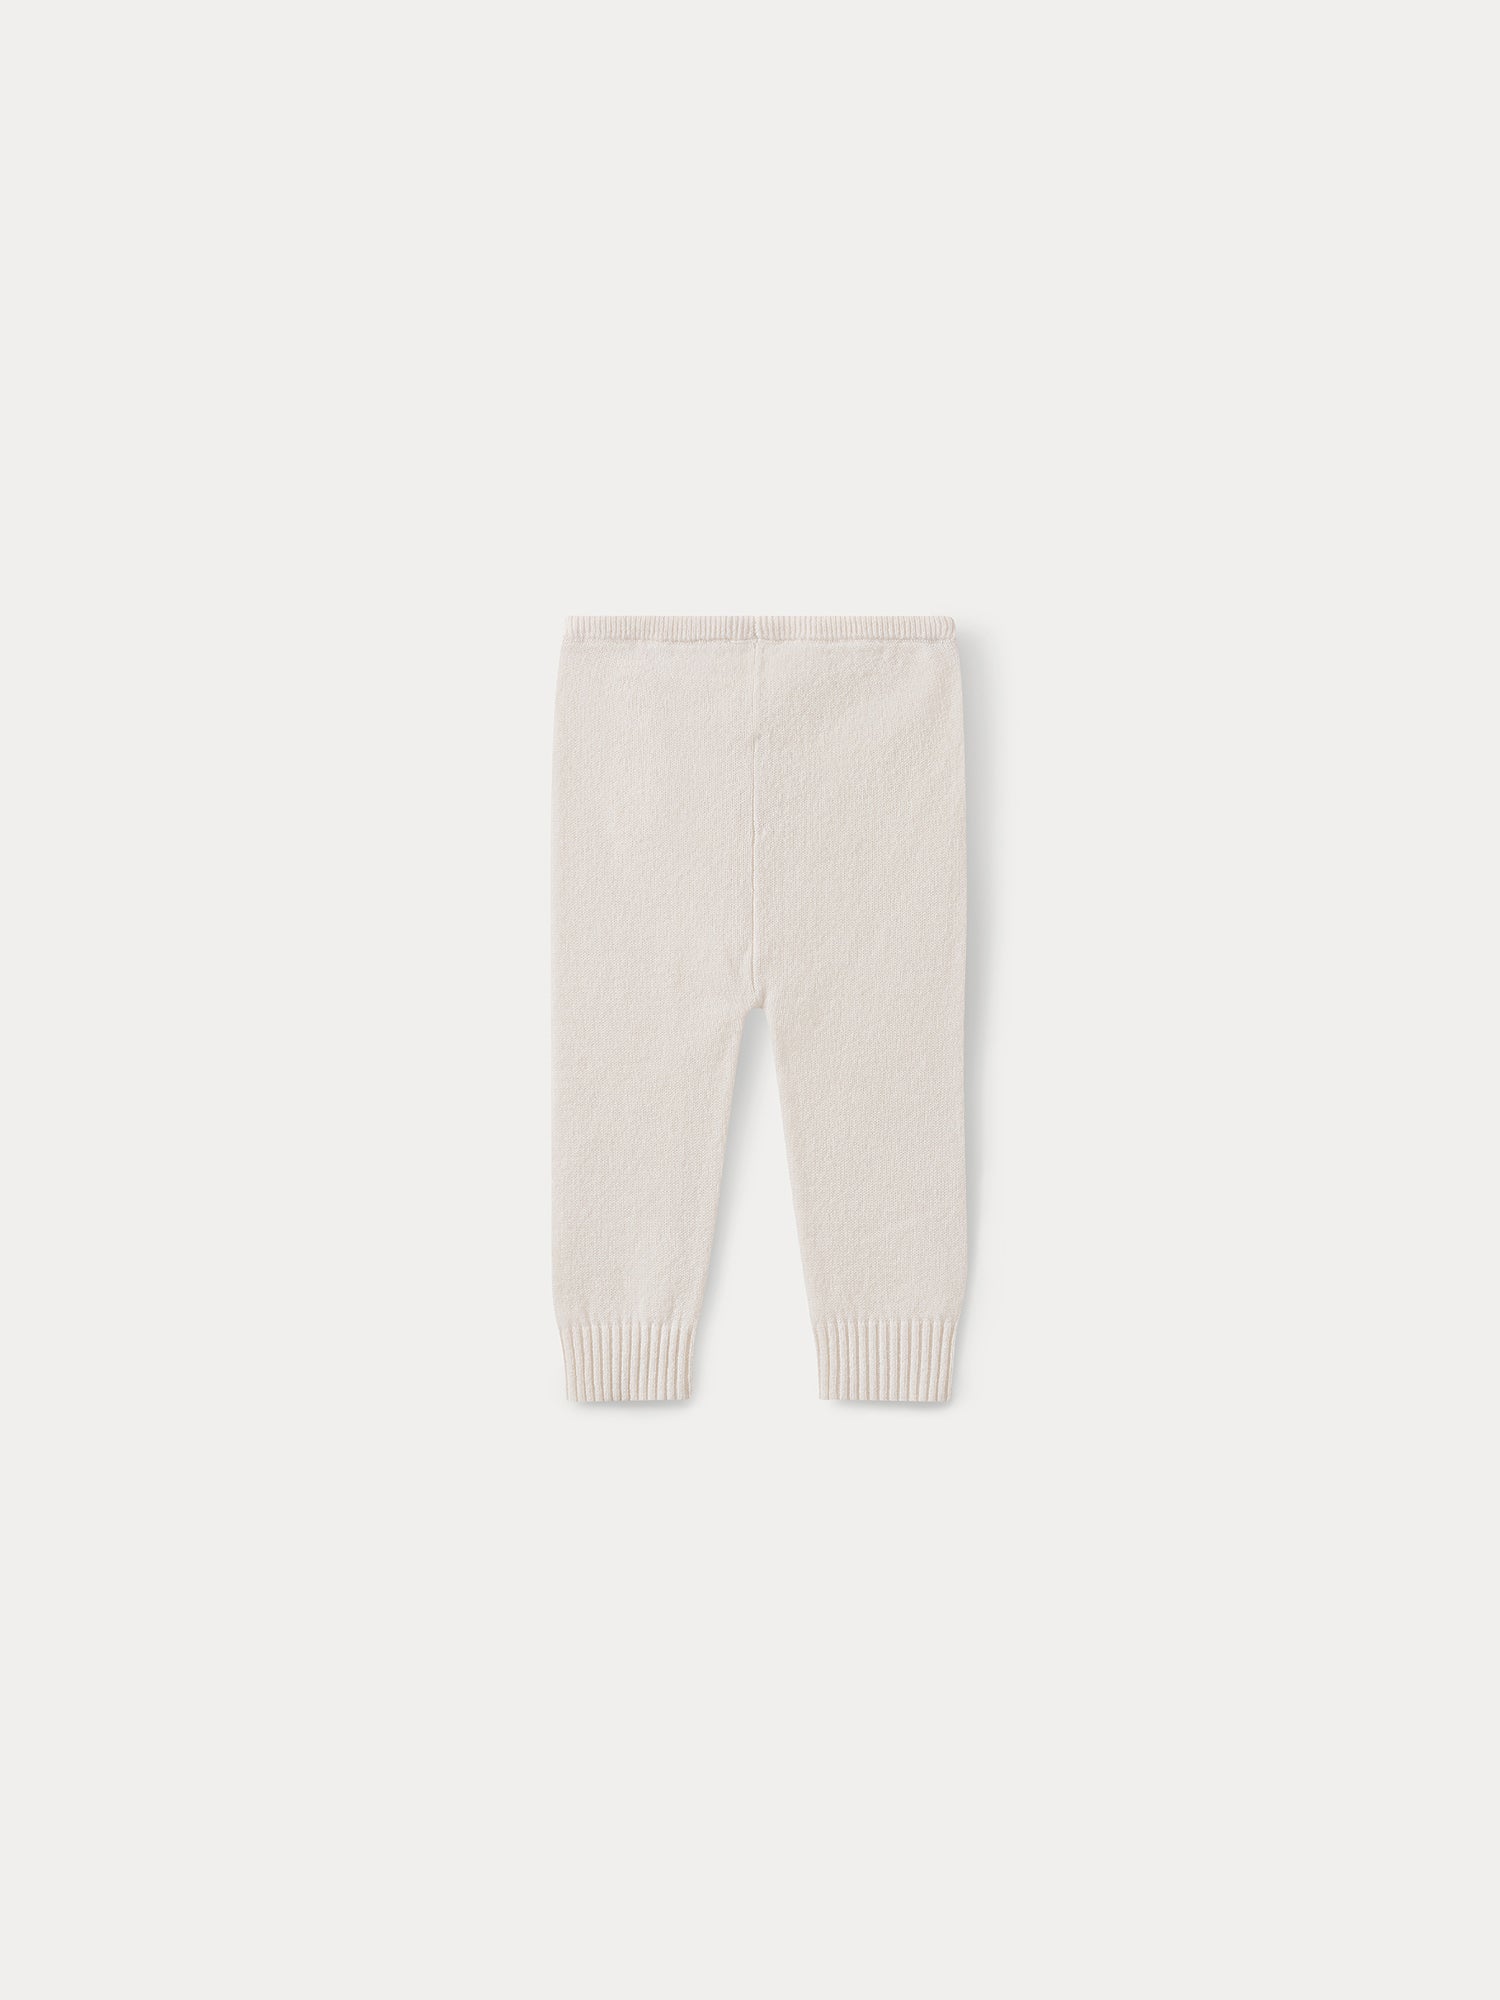 Aggregate 213+ childrens white leggings